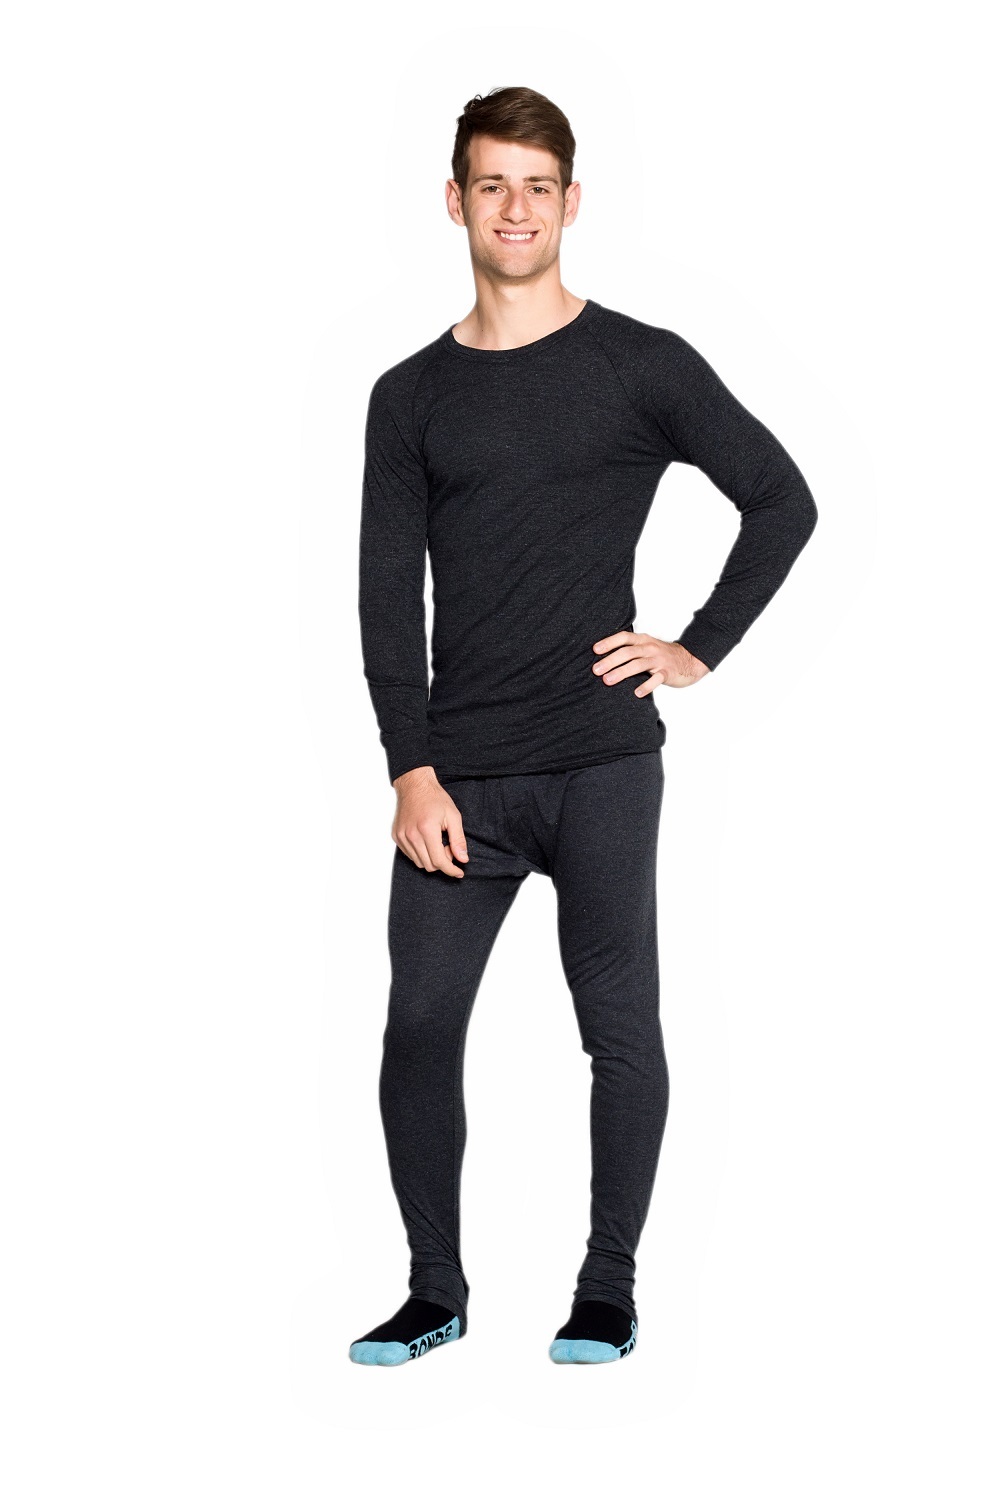 Angora Wool Blend Unisex Black Thermal Long Johns For Men Women SIZE L/XL Pants 